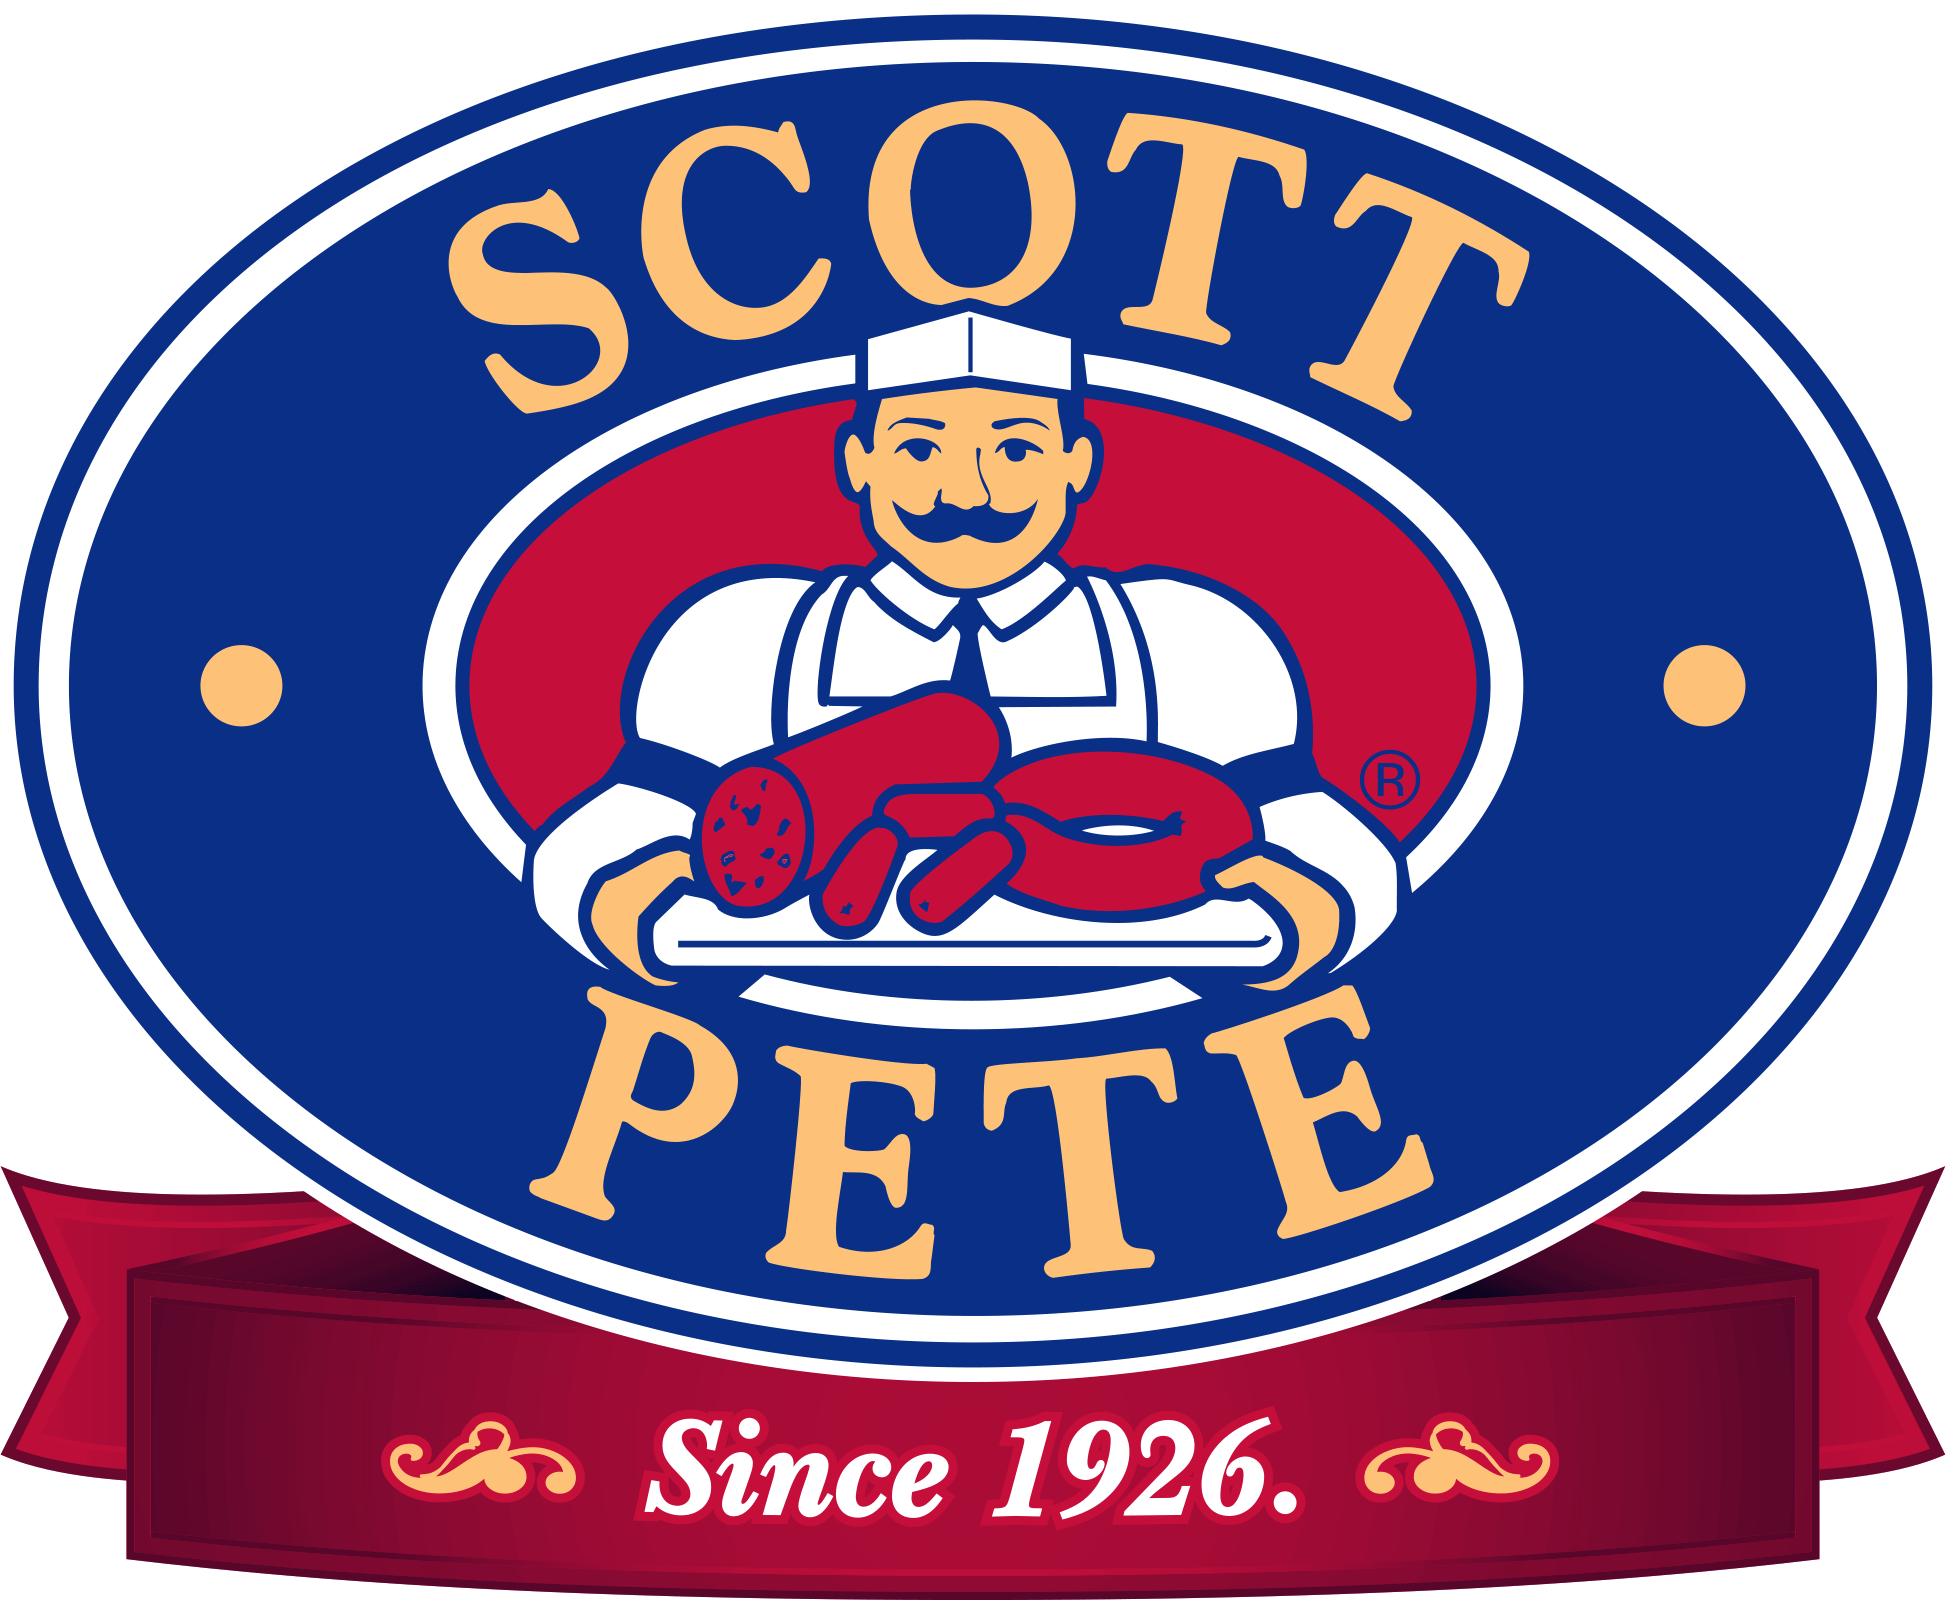 Scott Pete